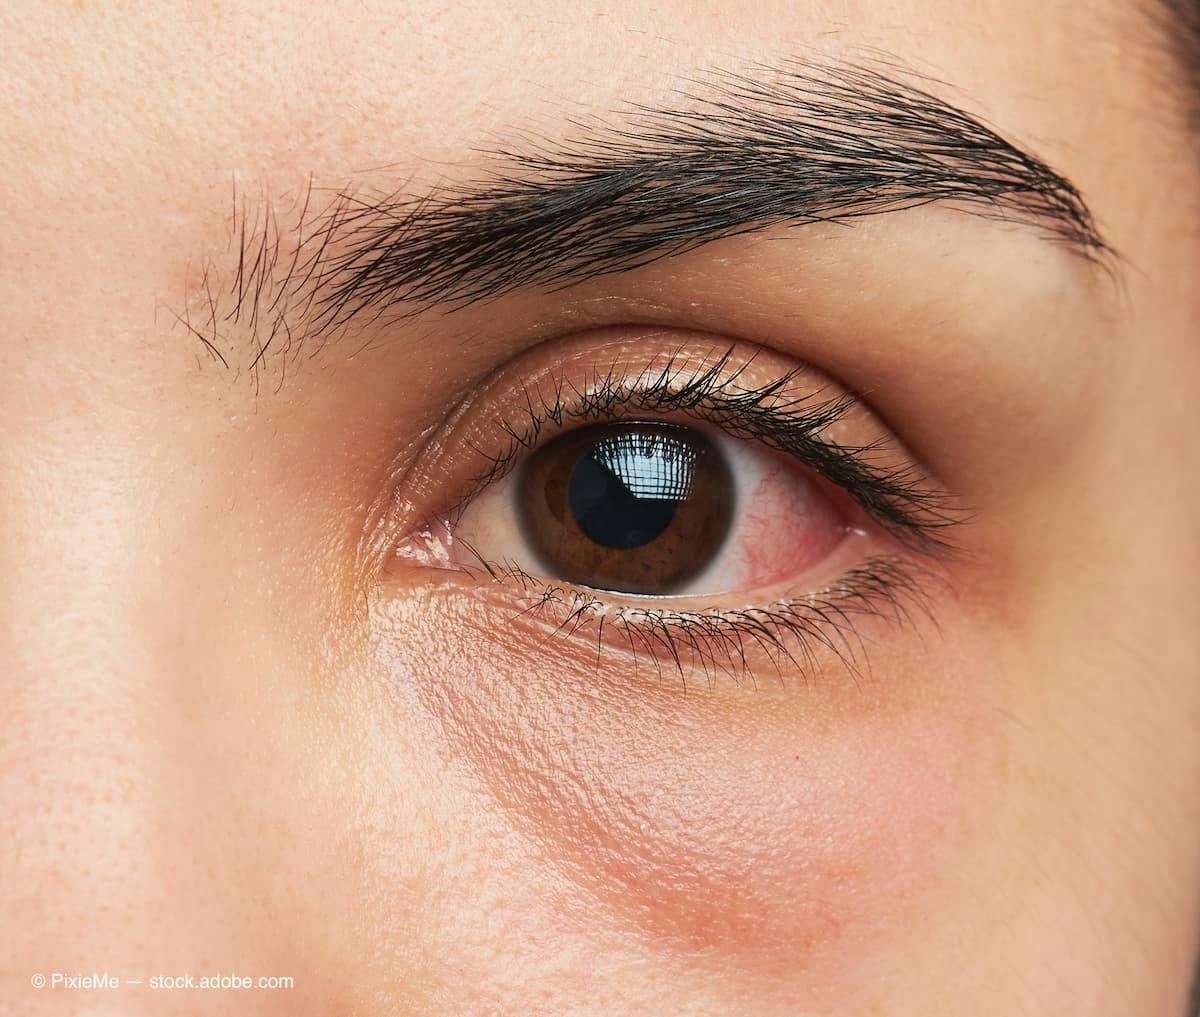 eye with infection (Adobe Stock / PixieMe)